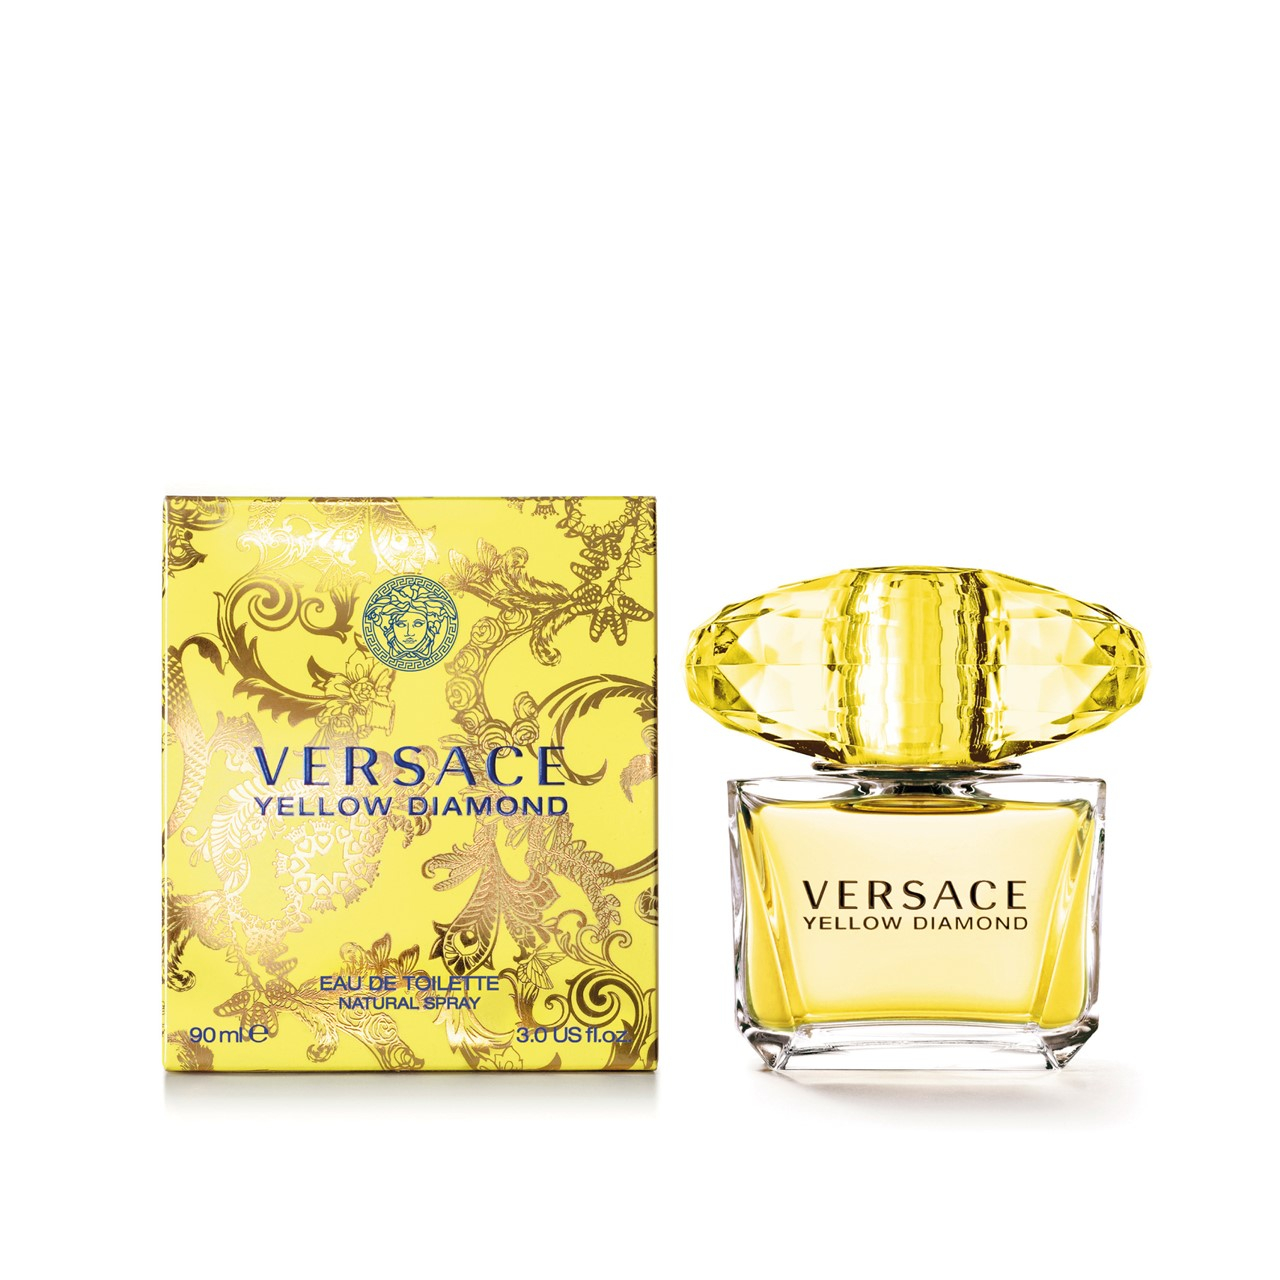 Versace Woman Perfume Yellow Diamond Online | website.jkuat.ac.ke